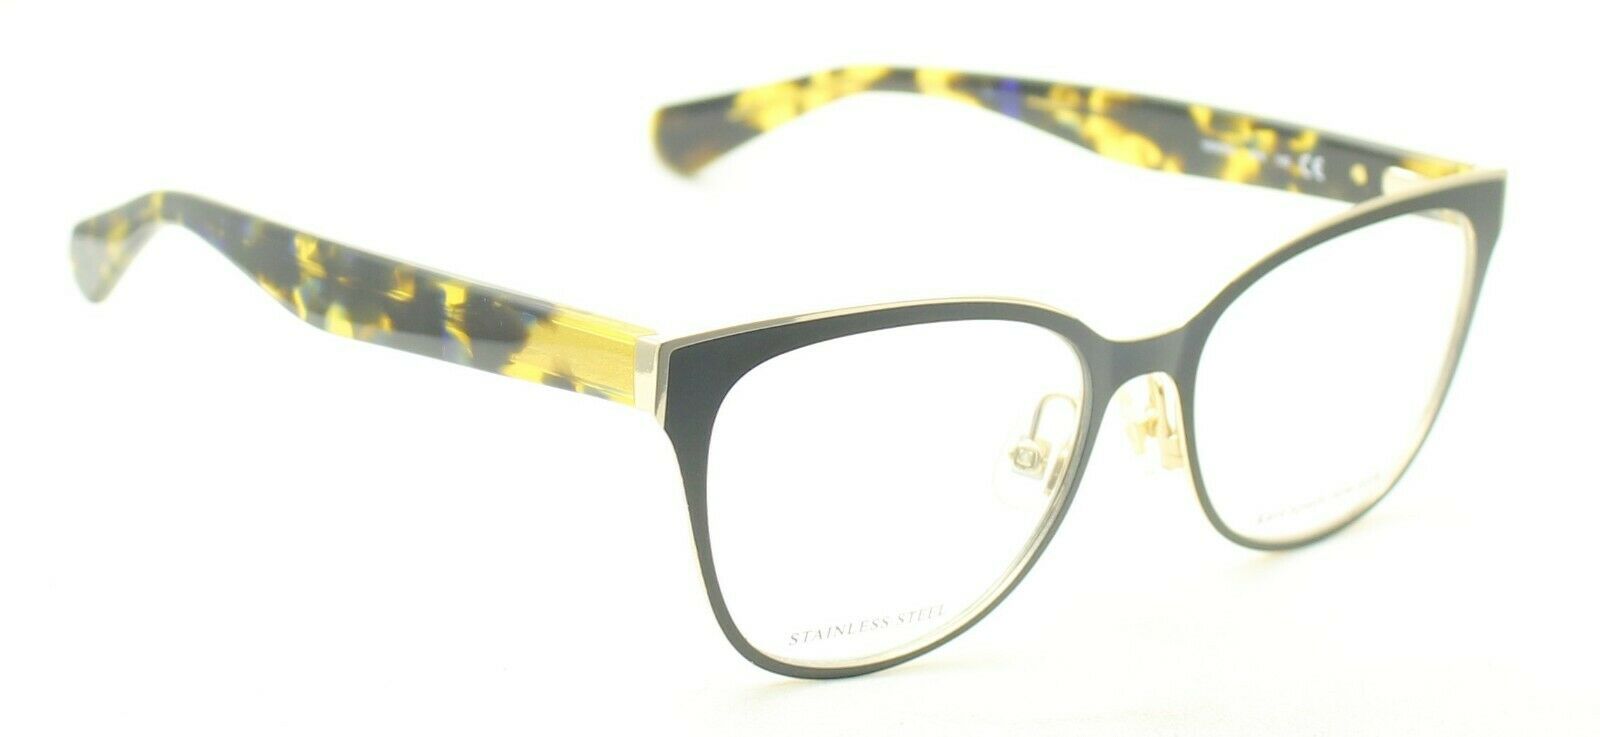 KATE SPADE NEW YORK Vandra JBW Eyewear FRAMES Glasses Eyeglasses RX Optical New